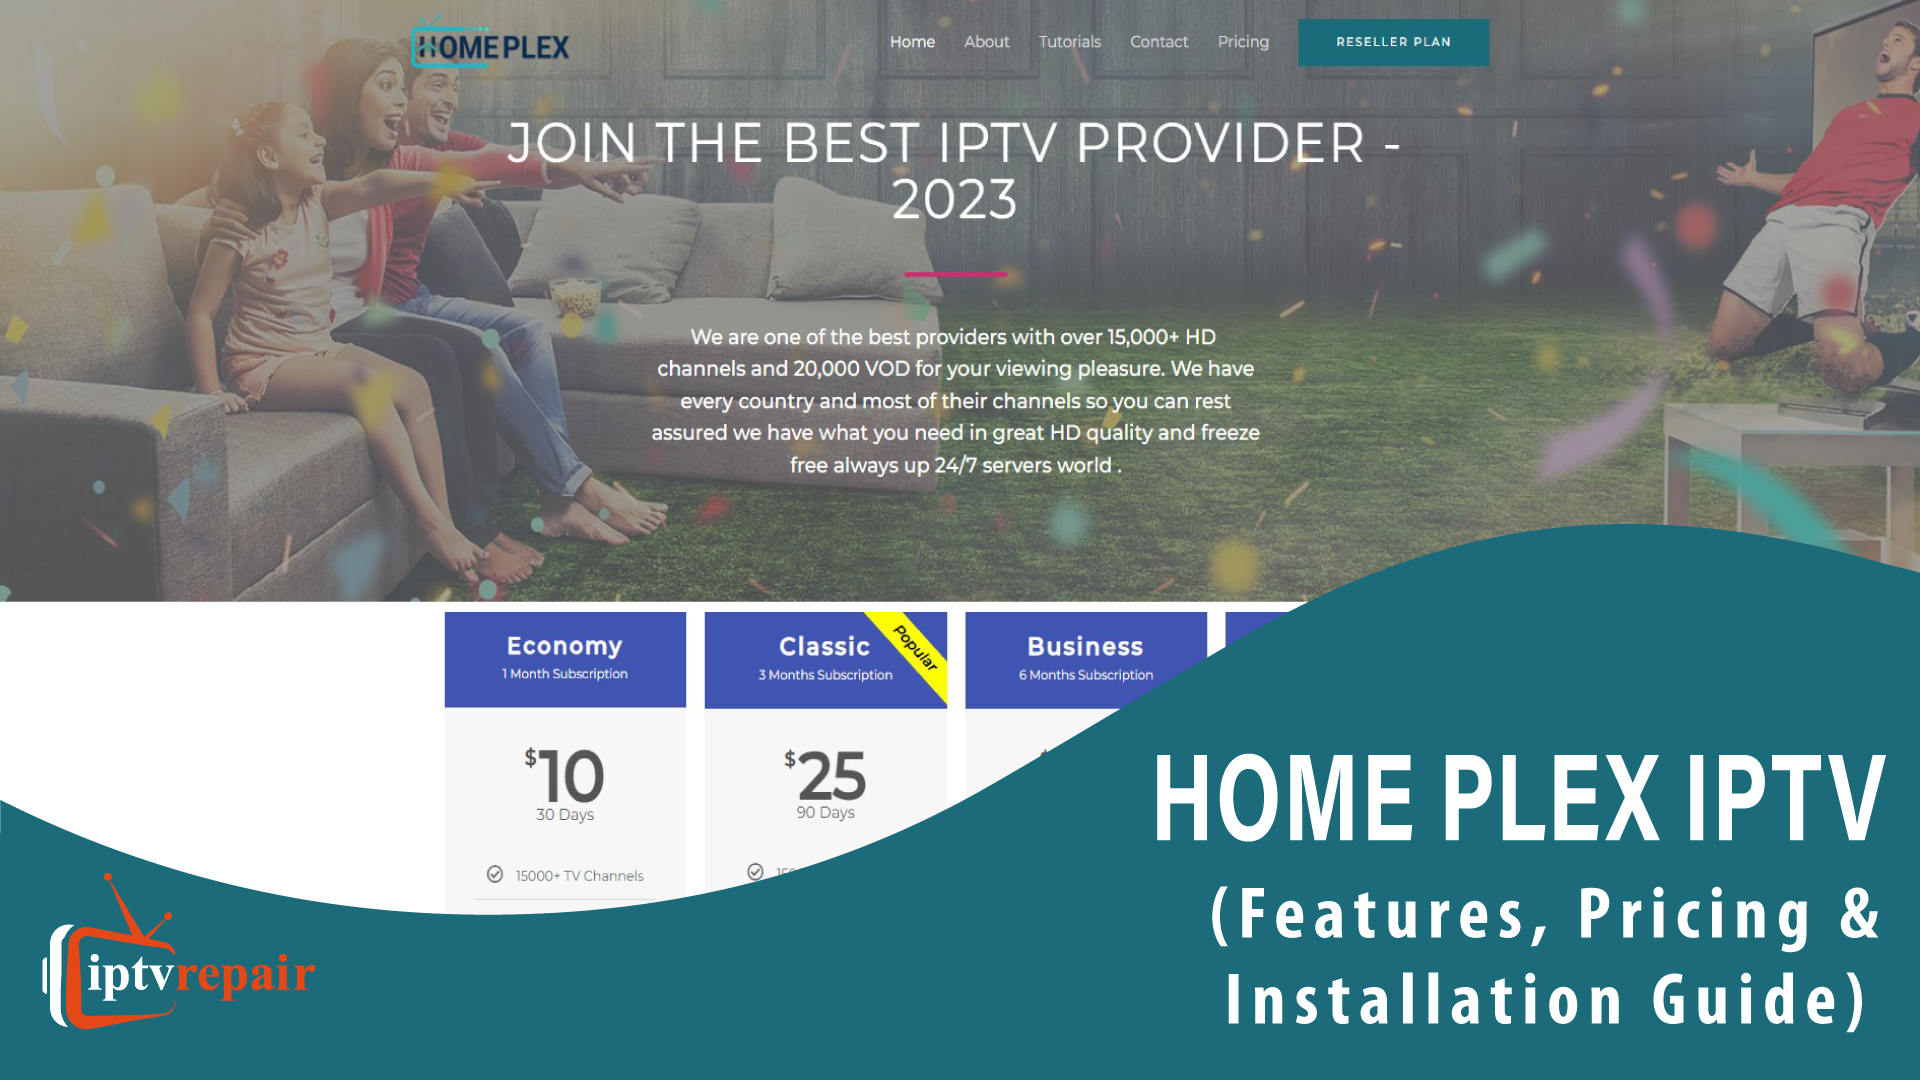 HomePlex IPTV Review